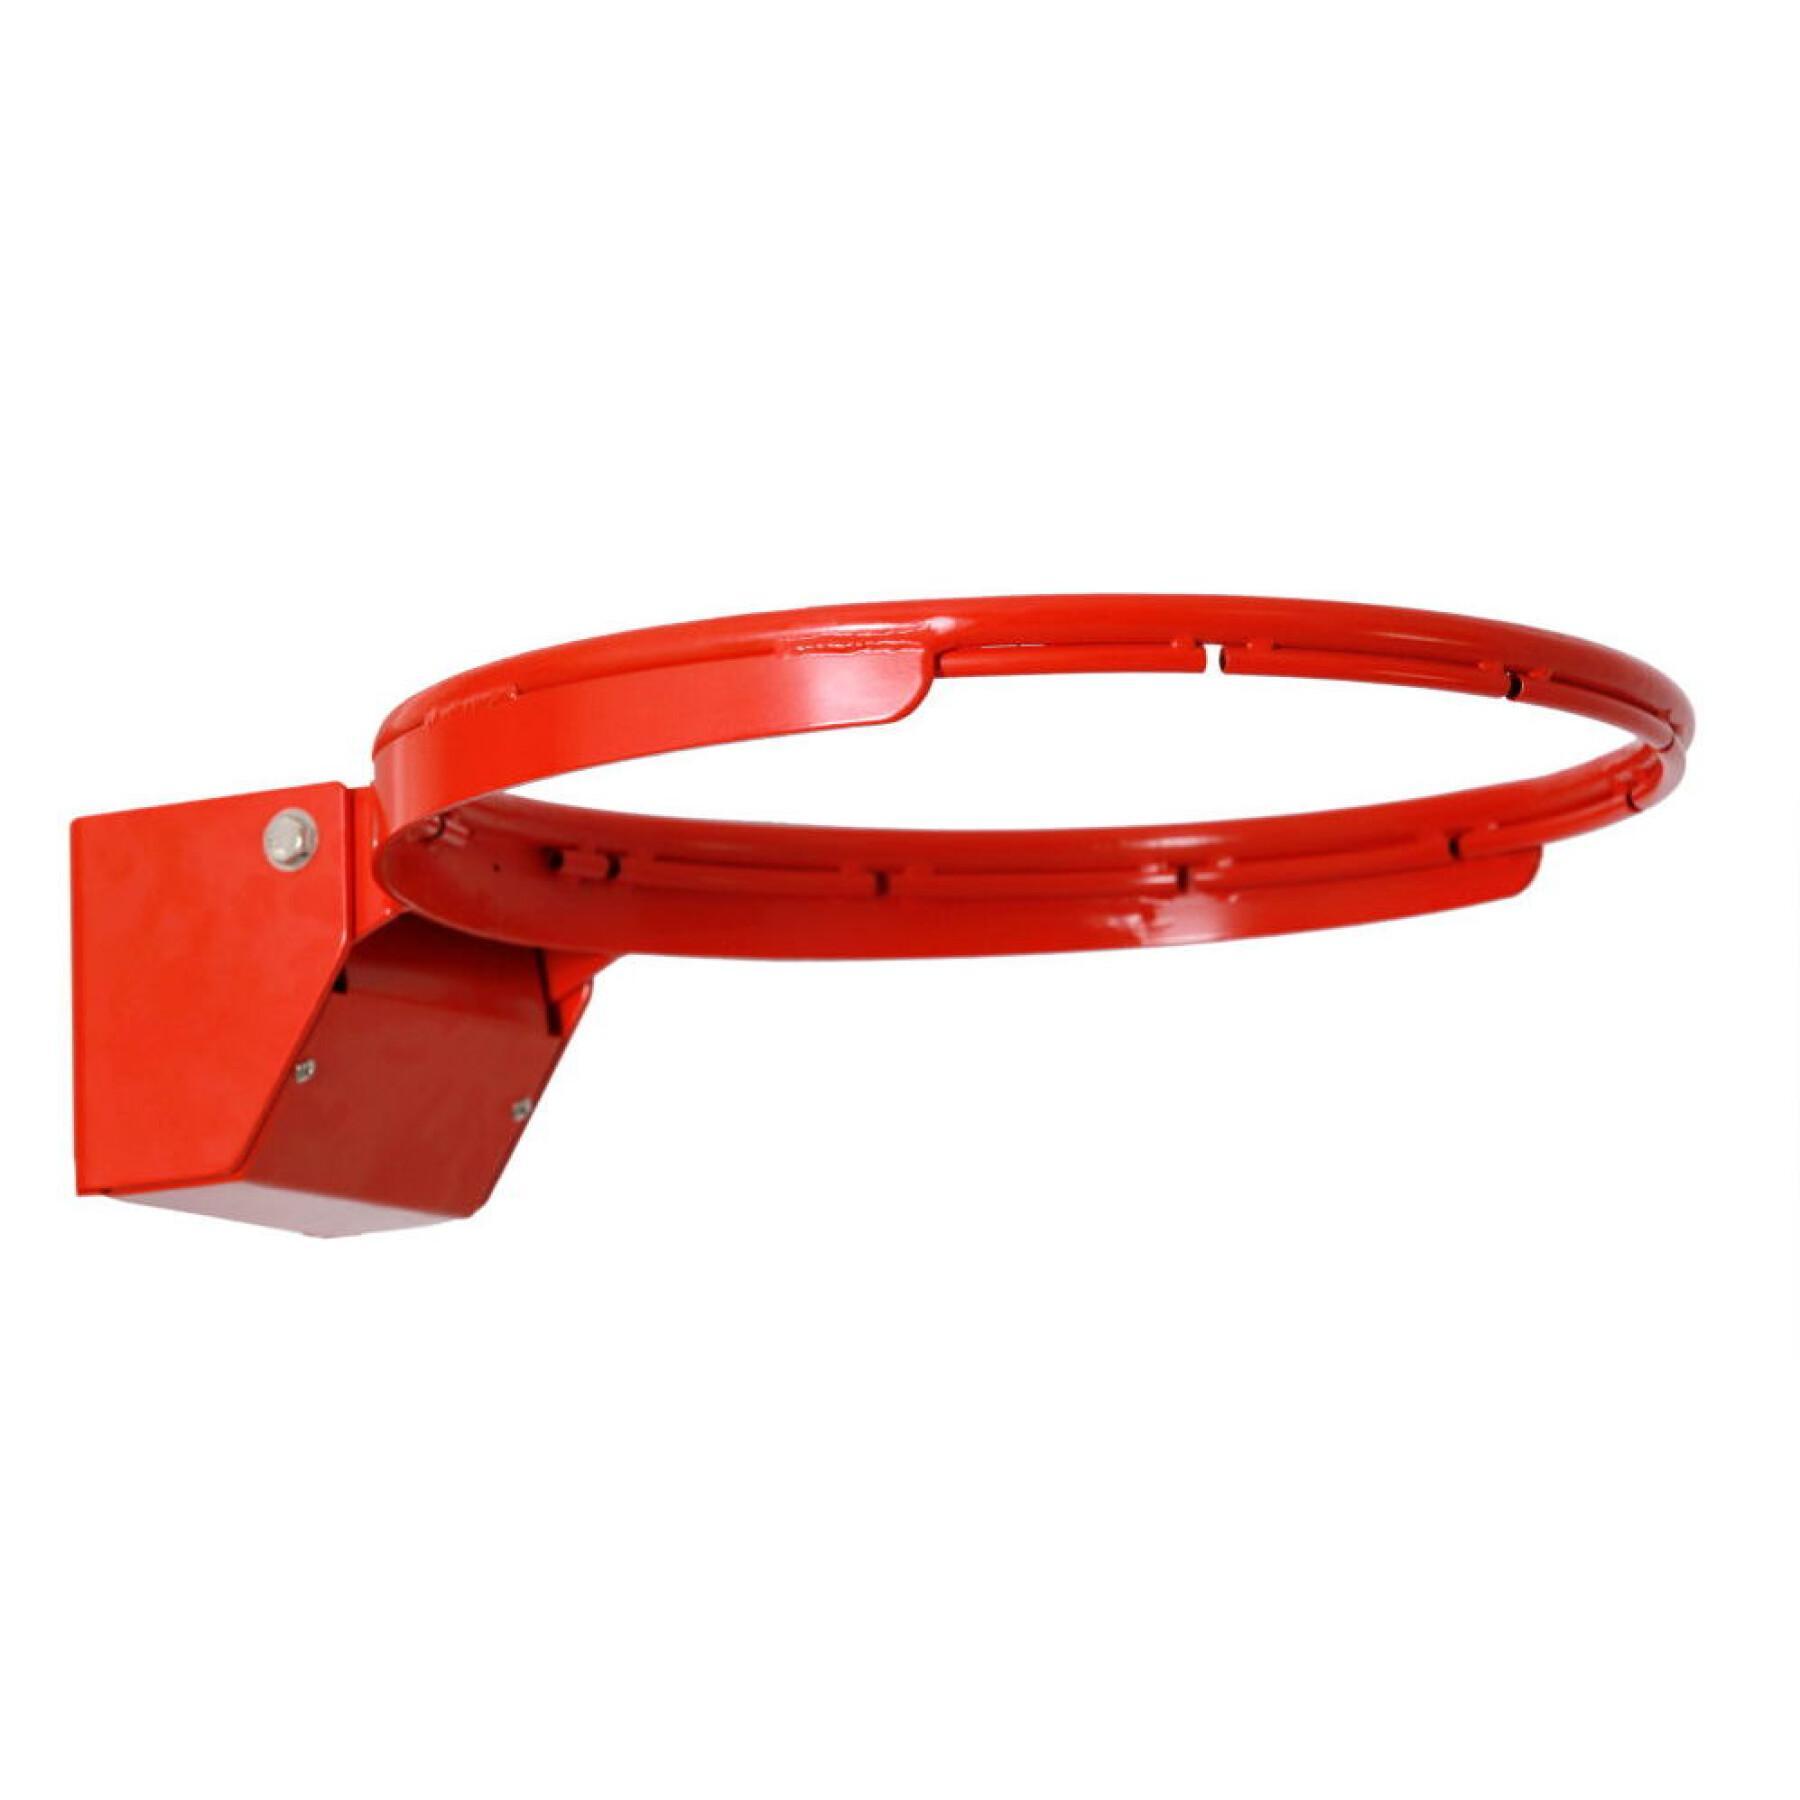 Flexible basketball hoop with integrated plastic rim PowerShot